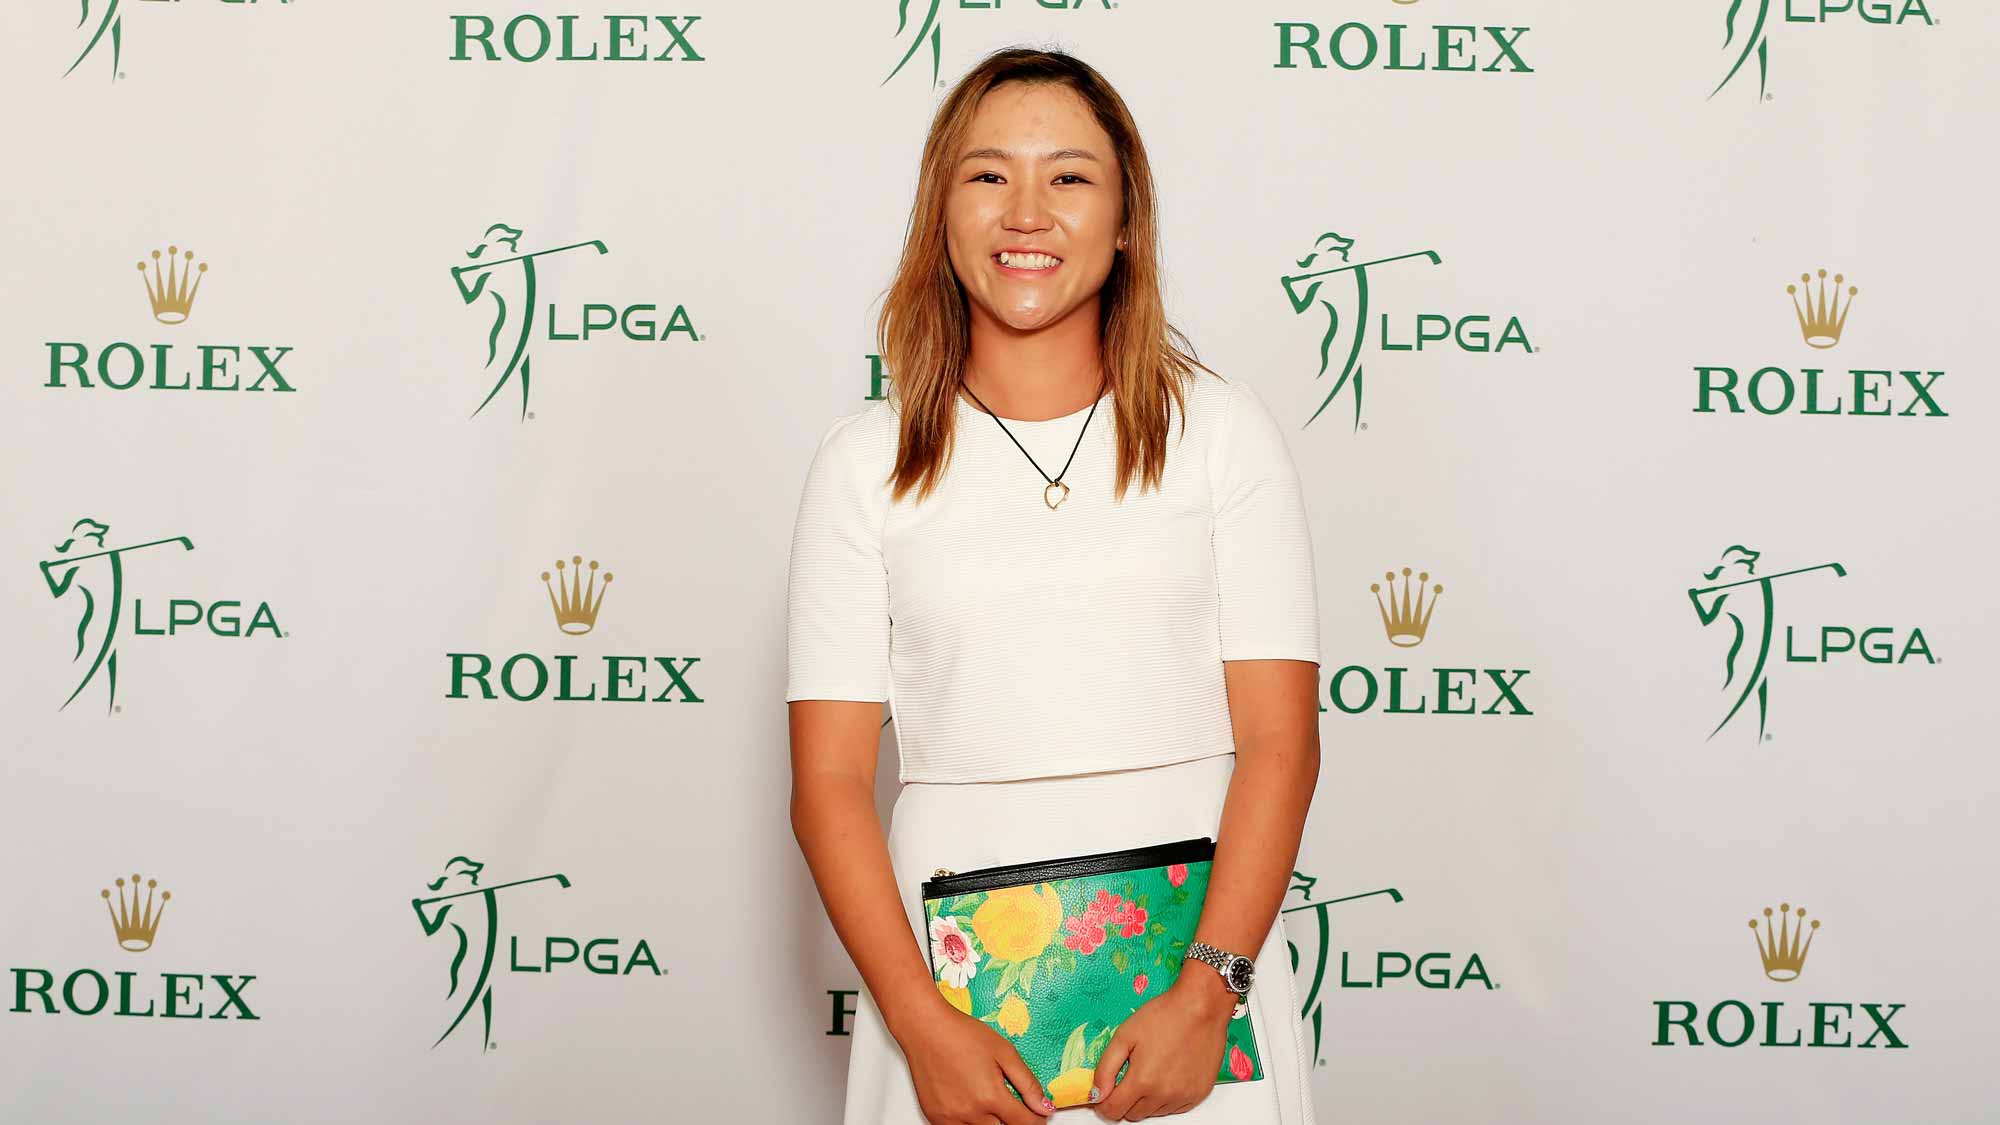 Lydia Ko of New Zealand poses during the LPGA Rolex Players Awards at the Ritz-Carlton